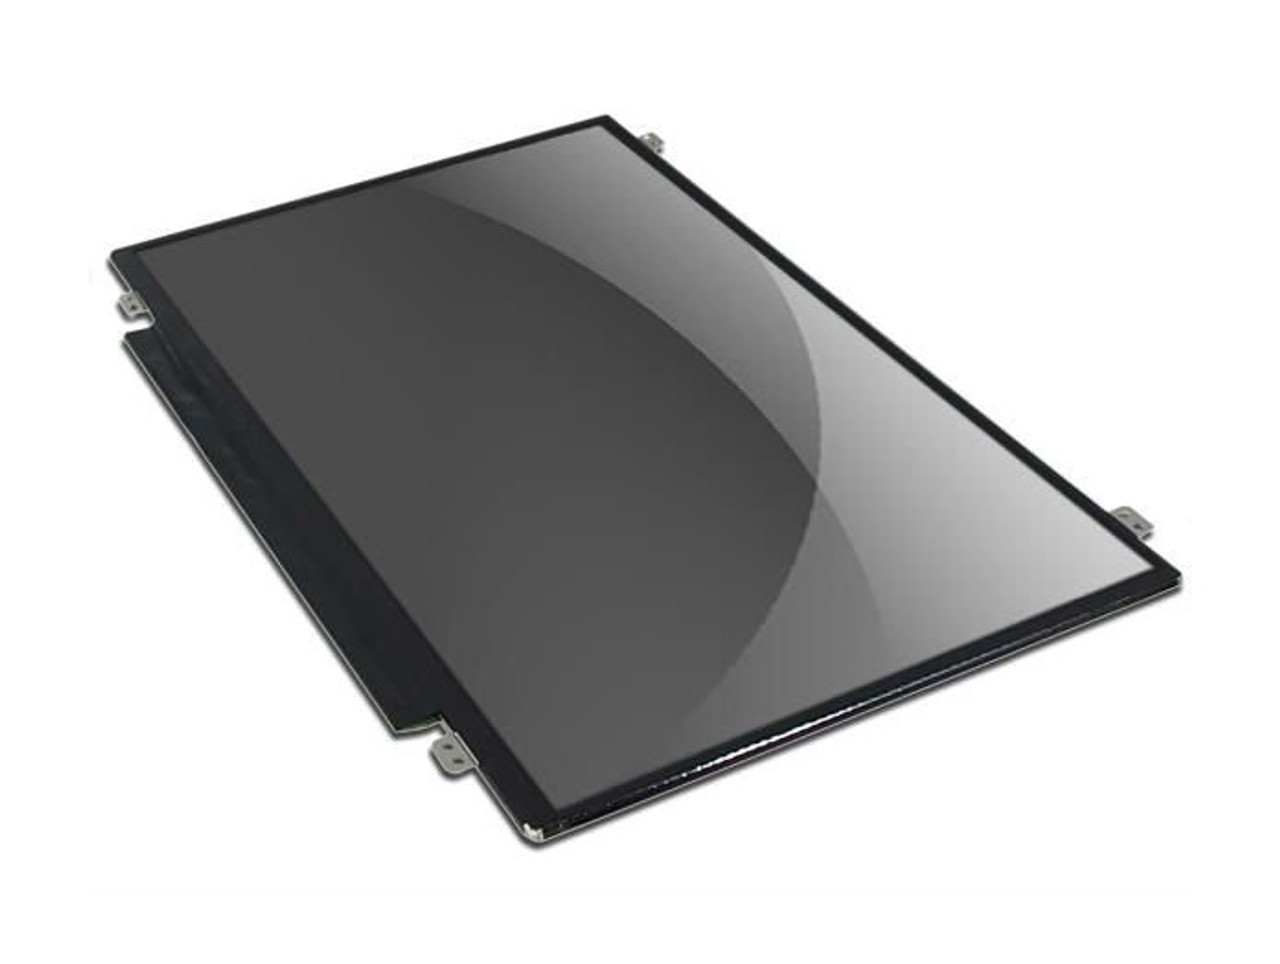 93P5687 - IBM Lenovo 14-inch ( 1366x768 ) LED Backlight Anti-glair LCD for ThinkPad T420 T420i